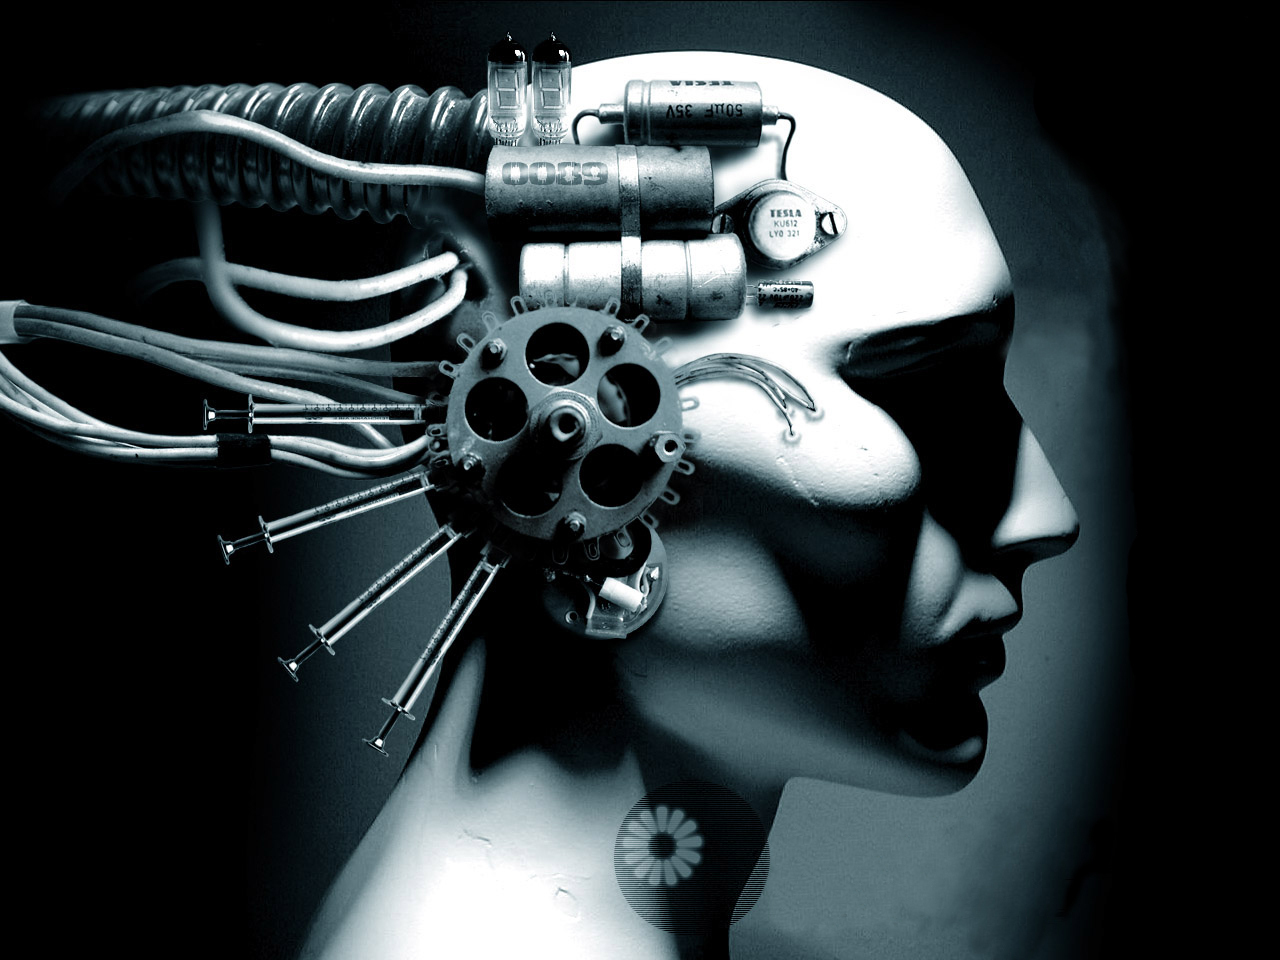 cyberpunk-science-fiction-synthetic-biology-and-neural-implants-create-a-human-cyborg-machine.jpg